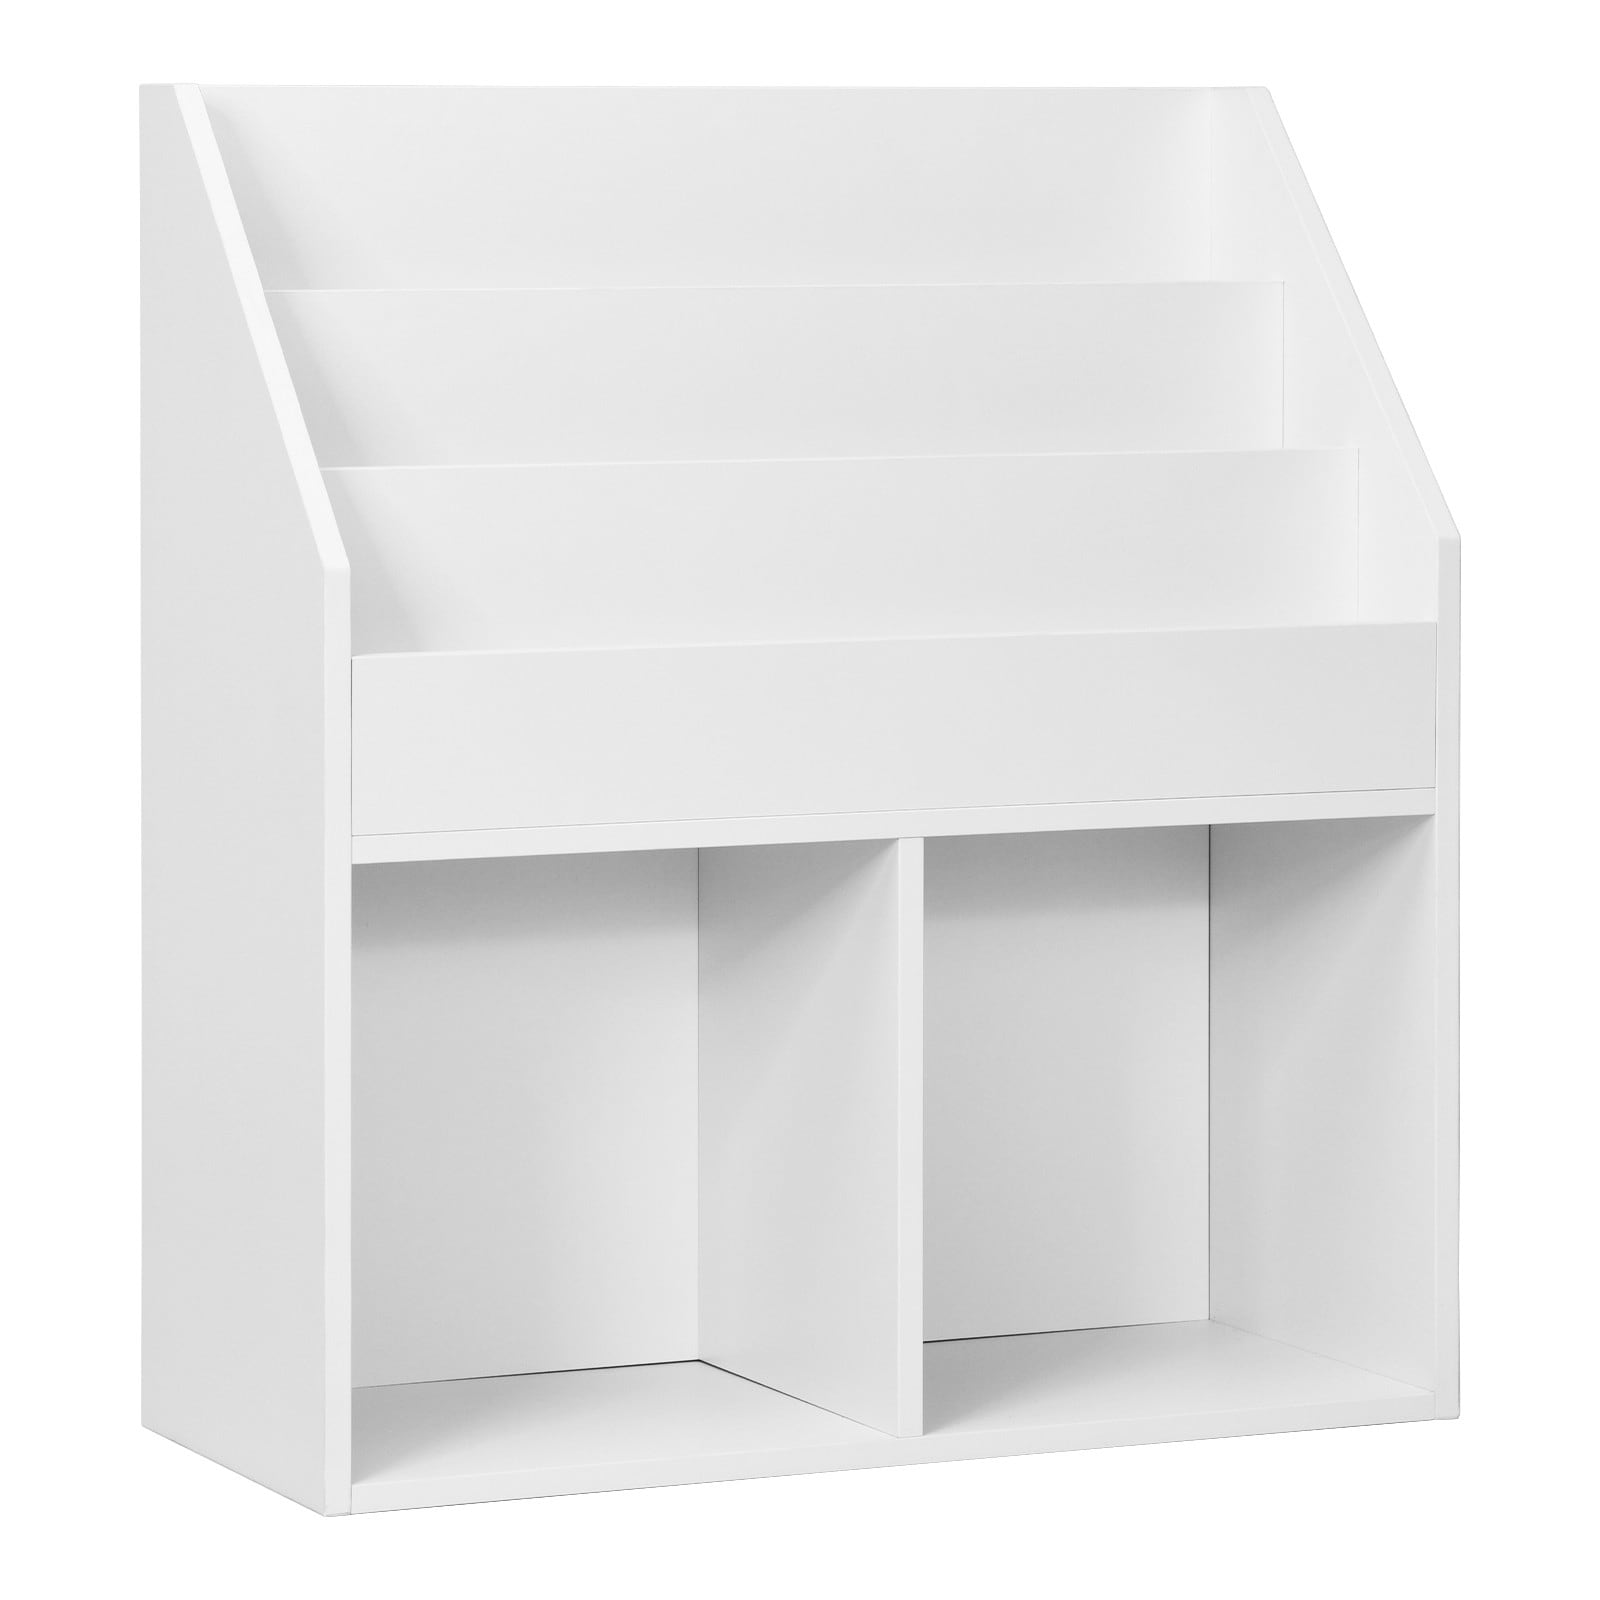 https://ak1.ostkcdn.com/images/products/is/images/direct/93328d7ead01f621391ec55f25975fa852d8e647/Kids-Wooden-Bookshelf-Bookcase-Children-Toy-Storage-Cabinet-Organizer-White.jpg